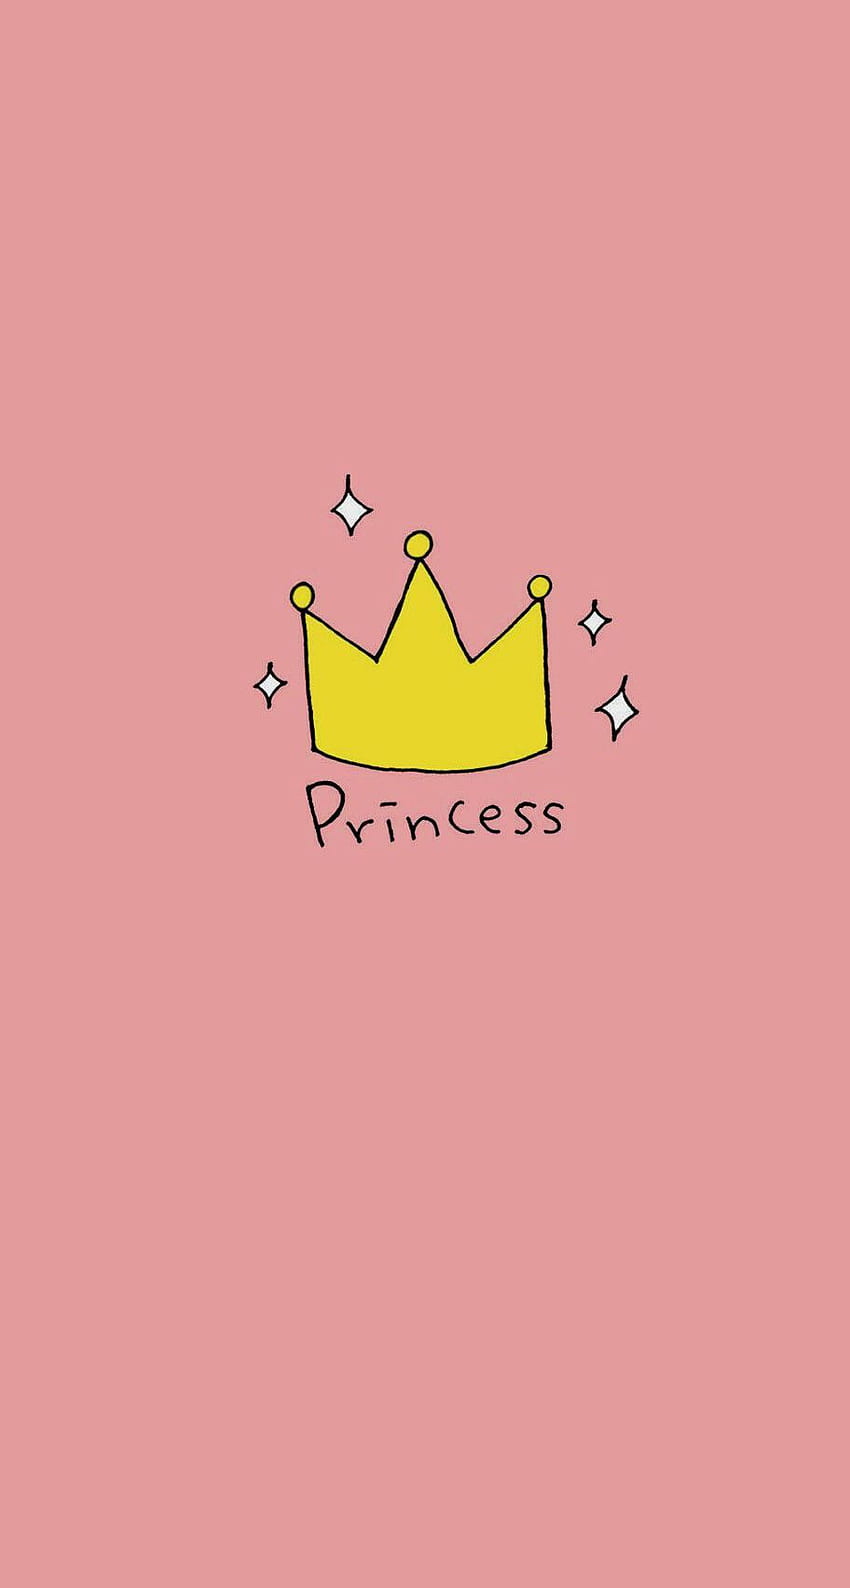 https://e0.pxfuel.com/wallpapers/169/617/desktop-wallpaper-princess-background-tumblr-princess-aesthetic-text.jpg